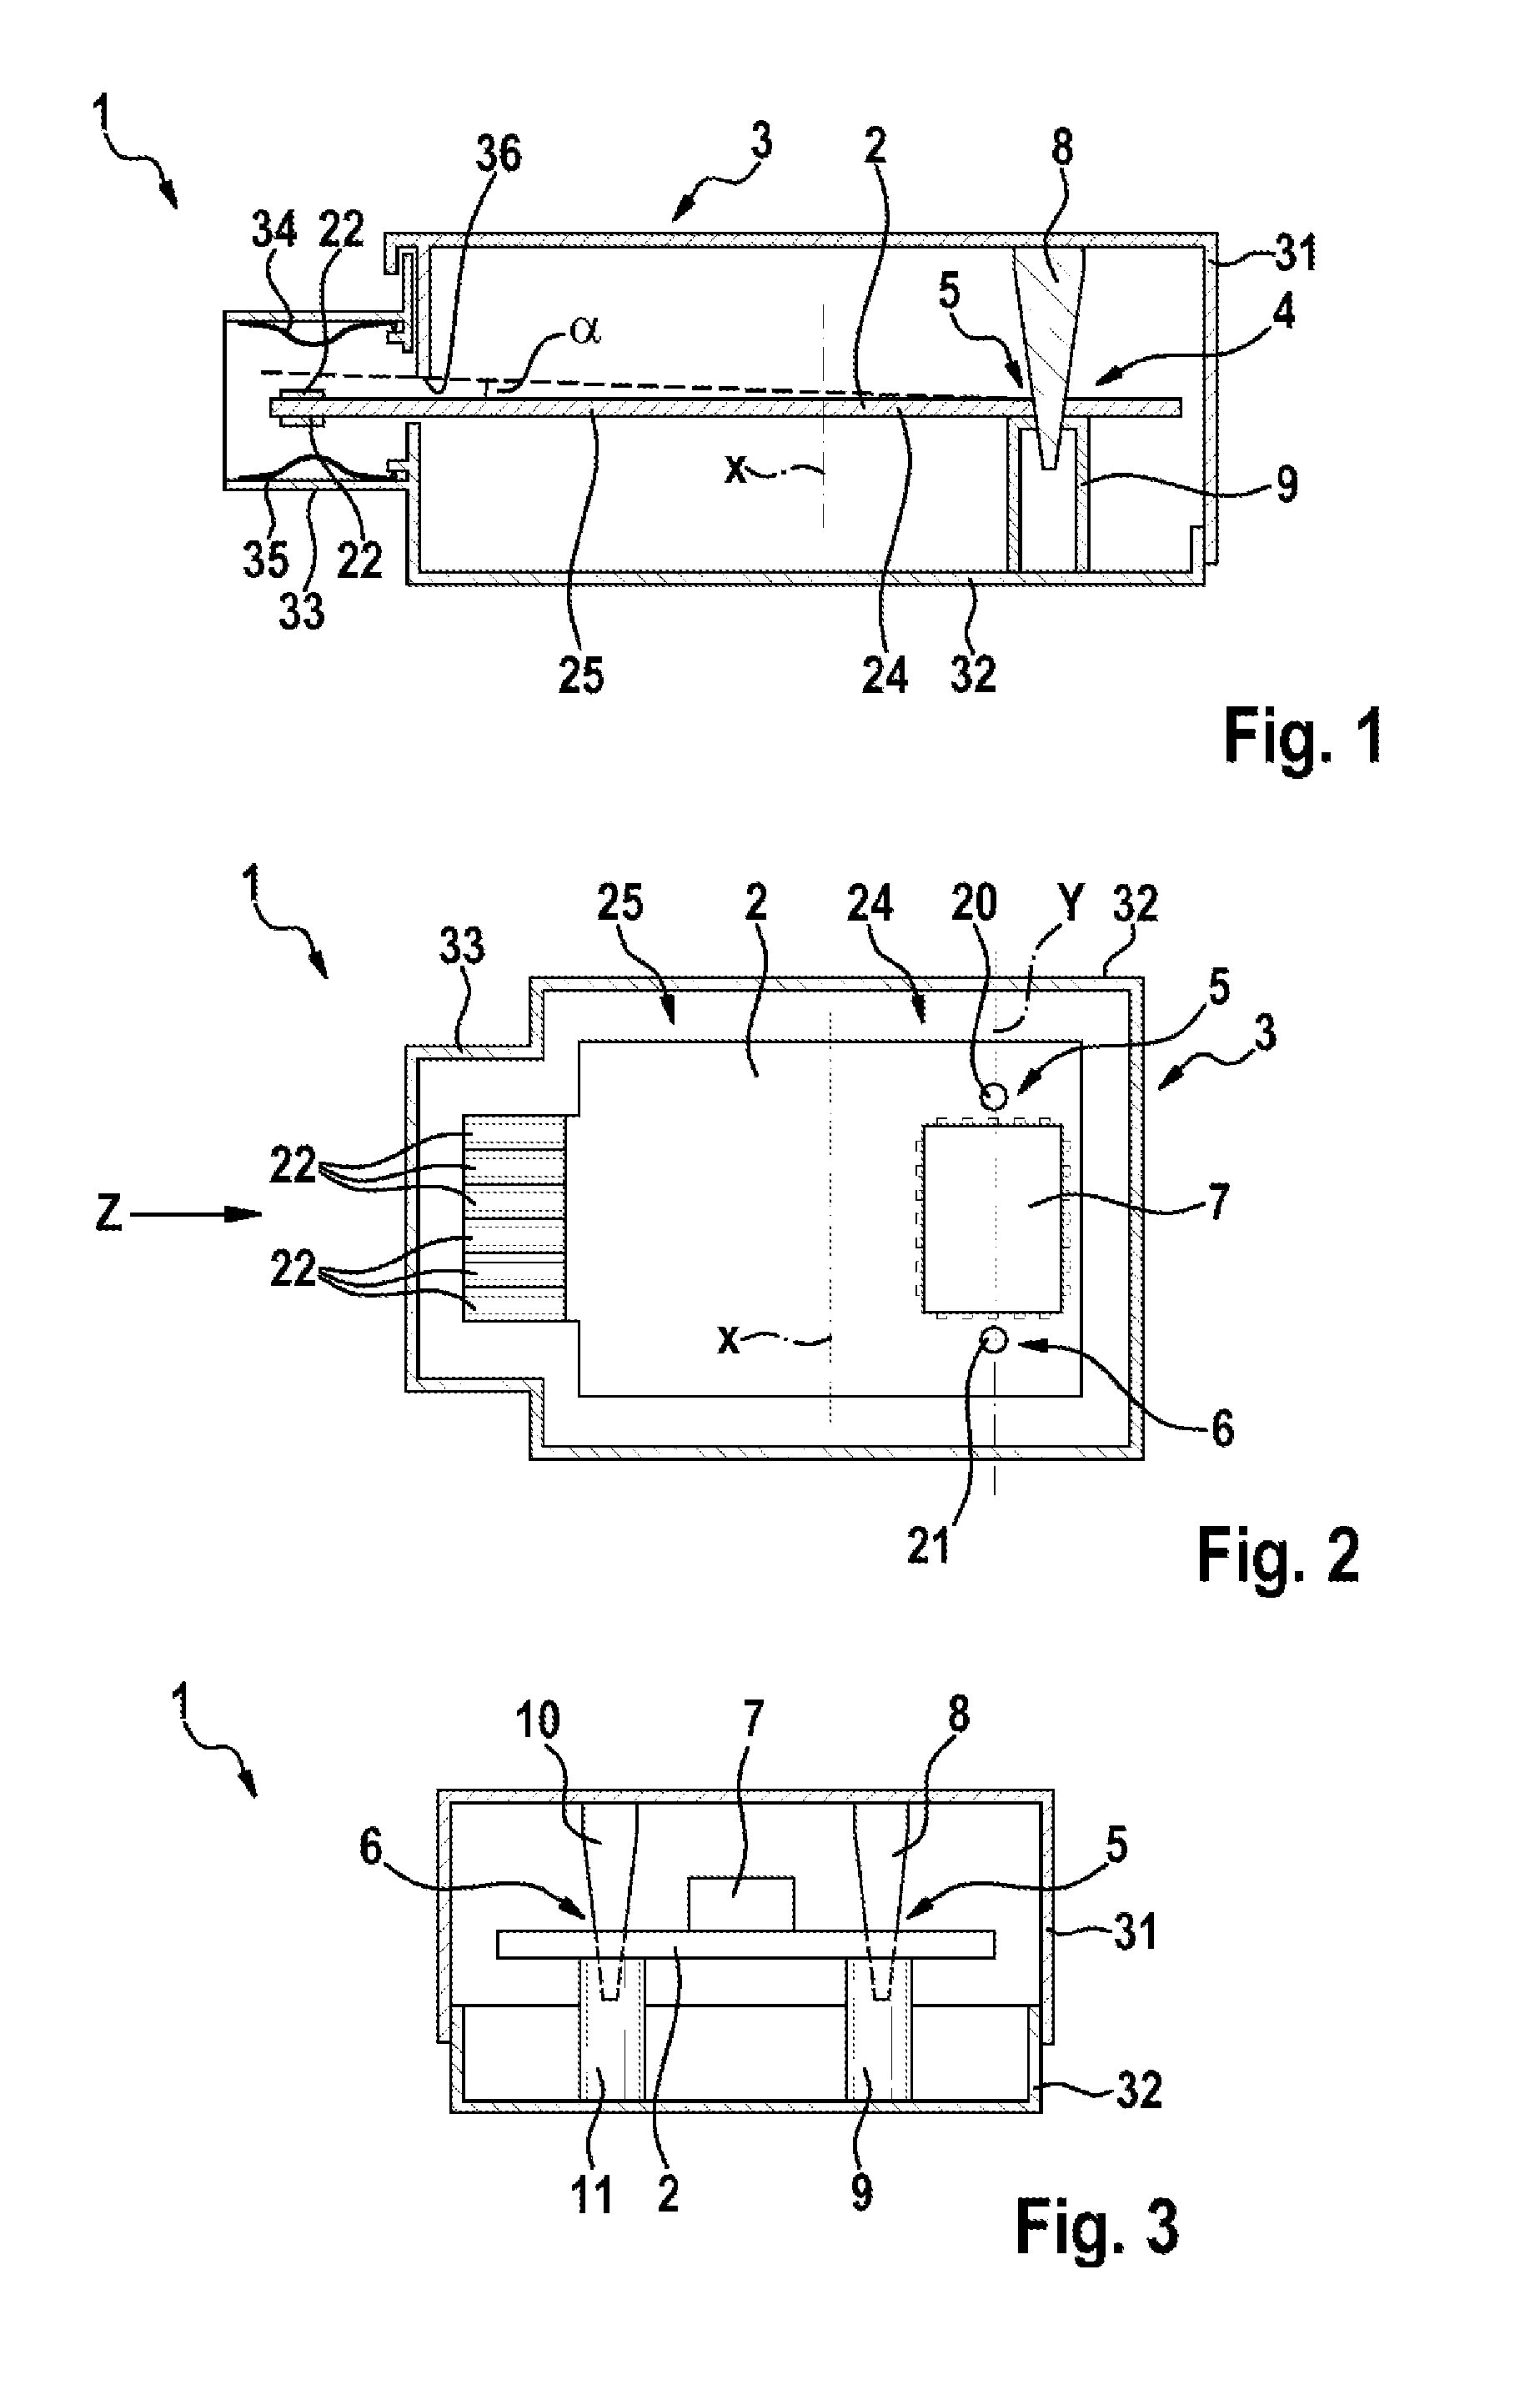 Electronic arrangement comprising a circuit board